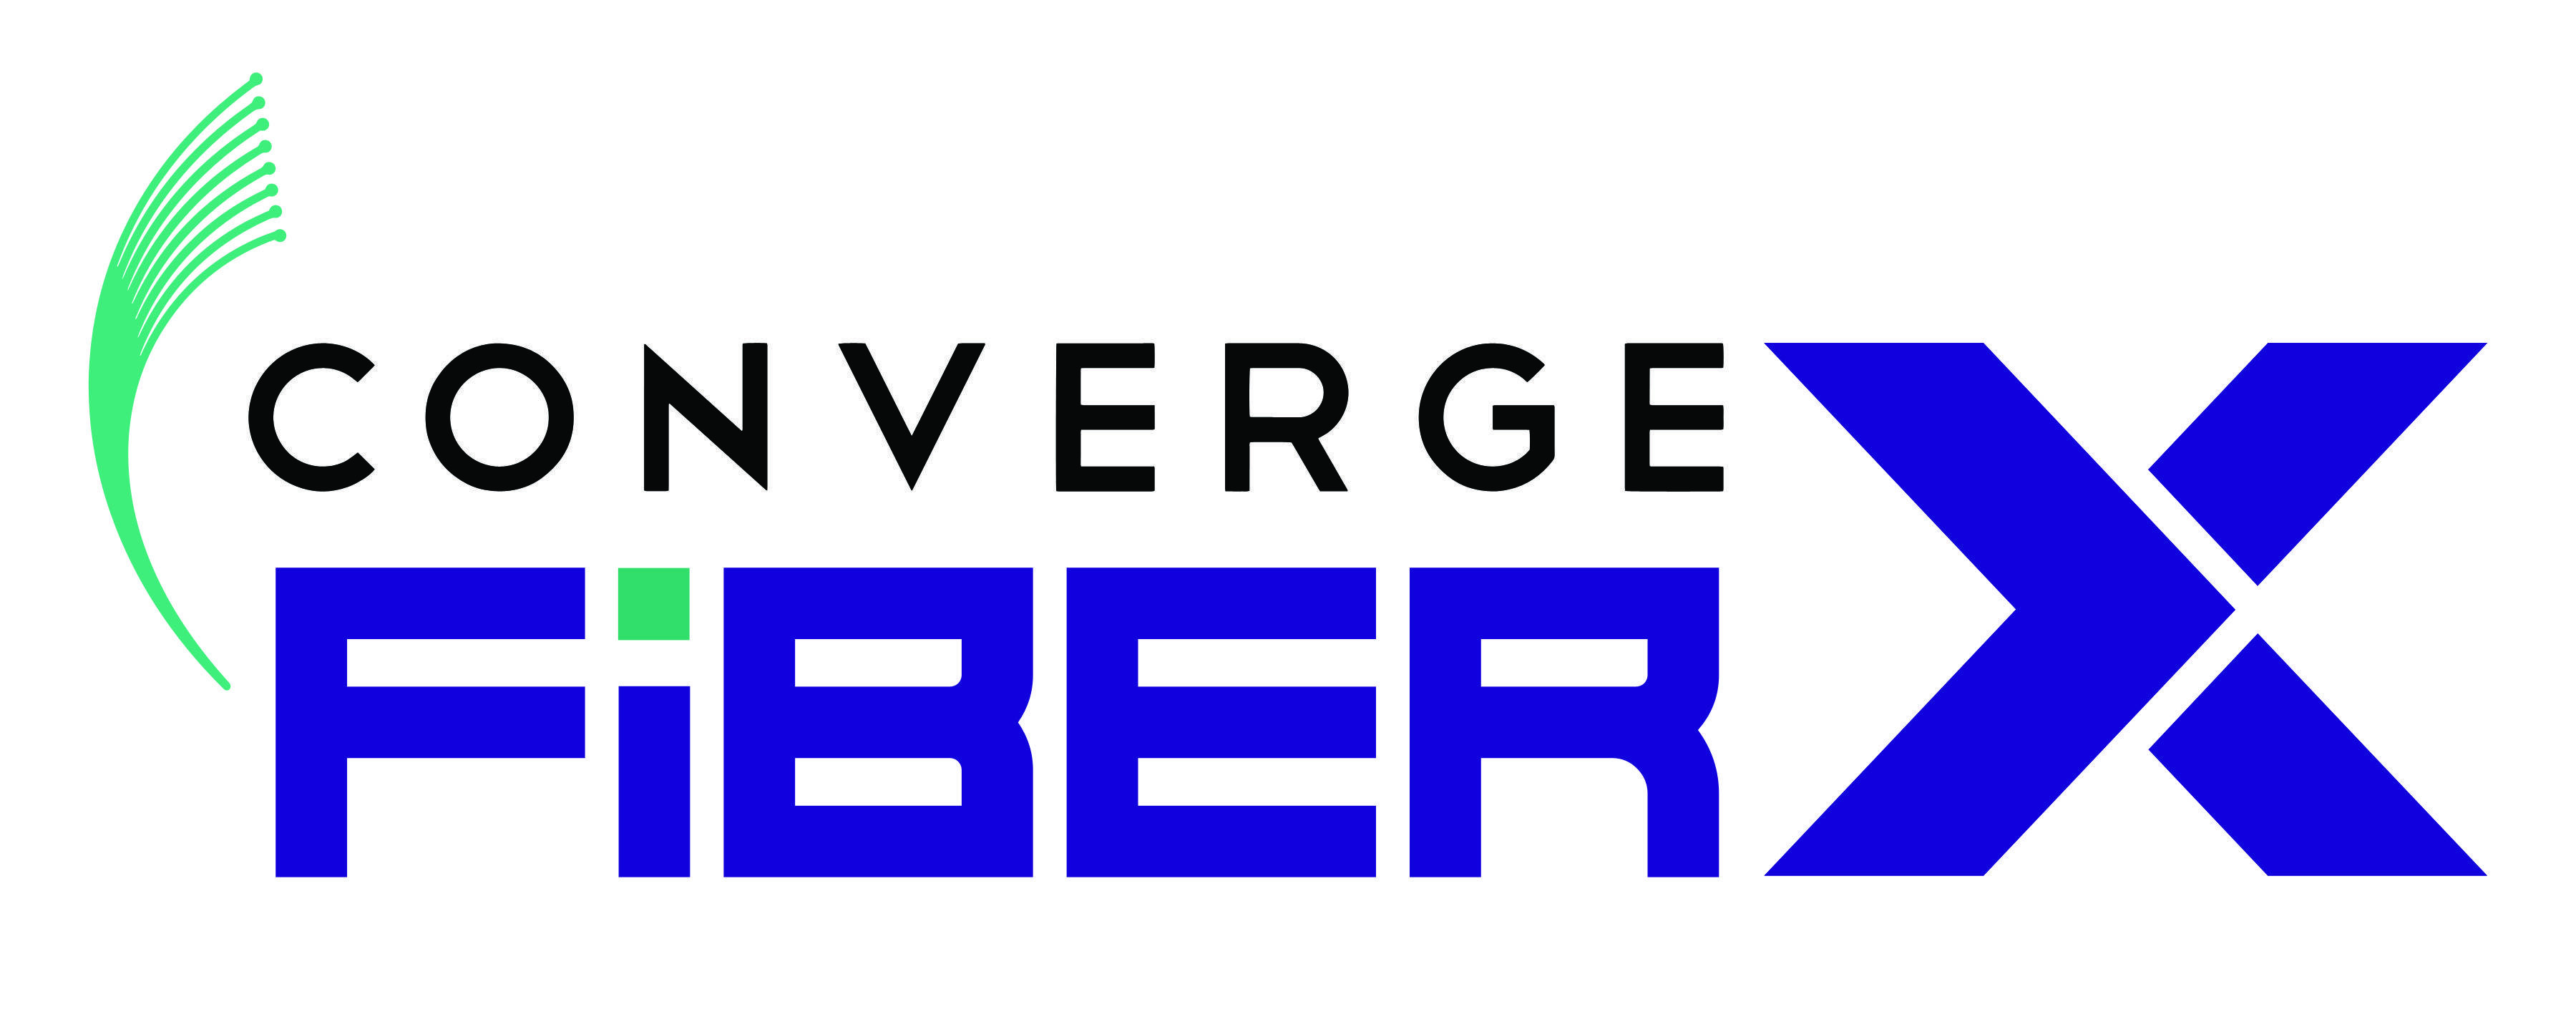 Converge Logo - Converge Fiber X Final Logo - Horizontal Version white - Orange Magazine